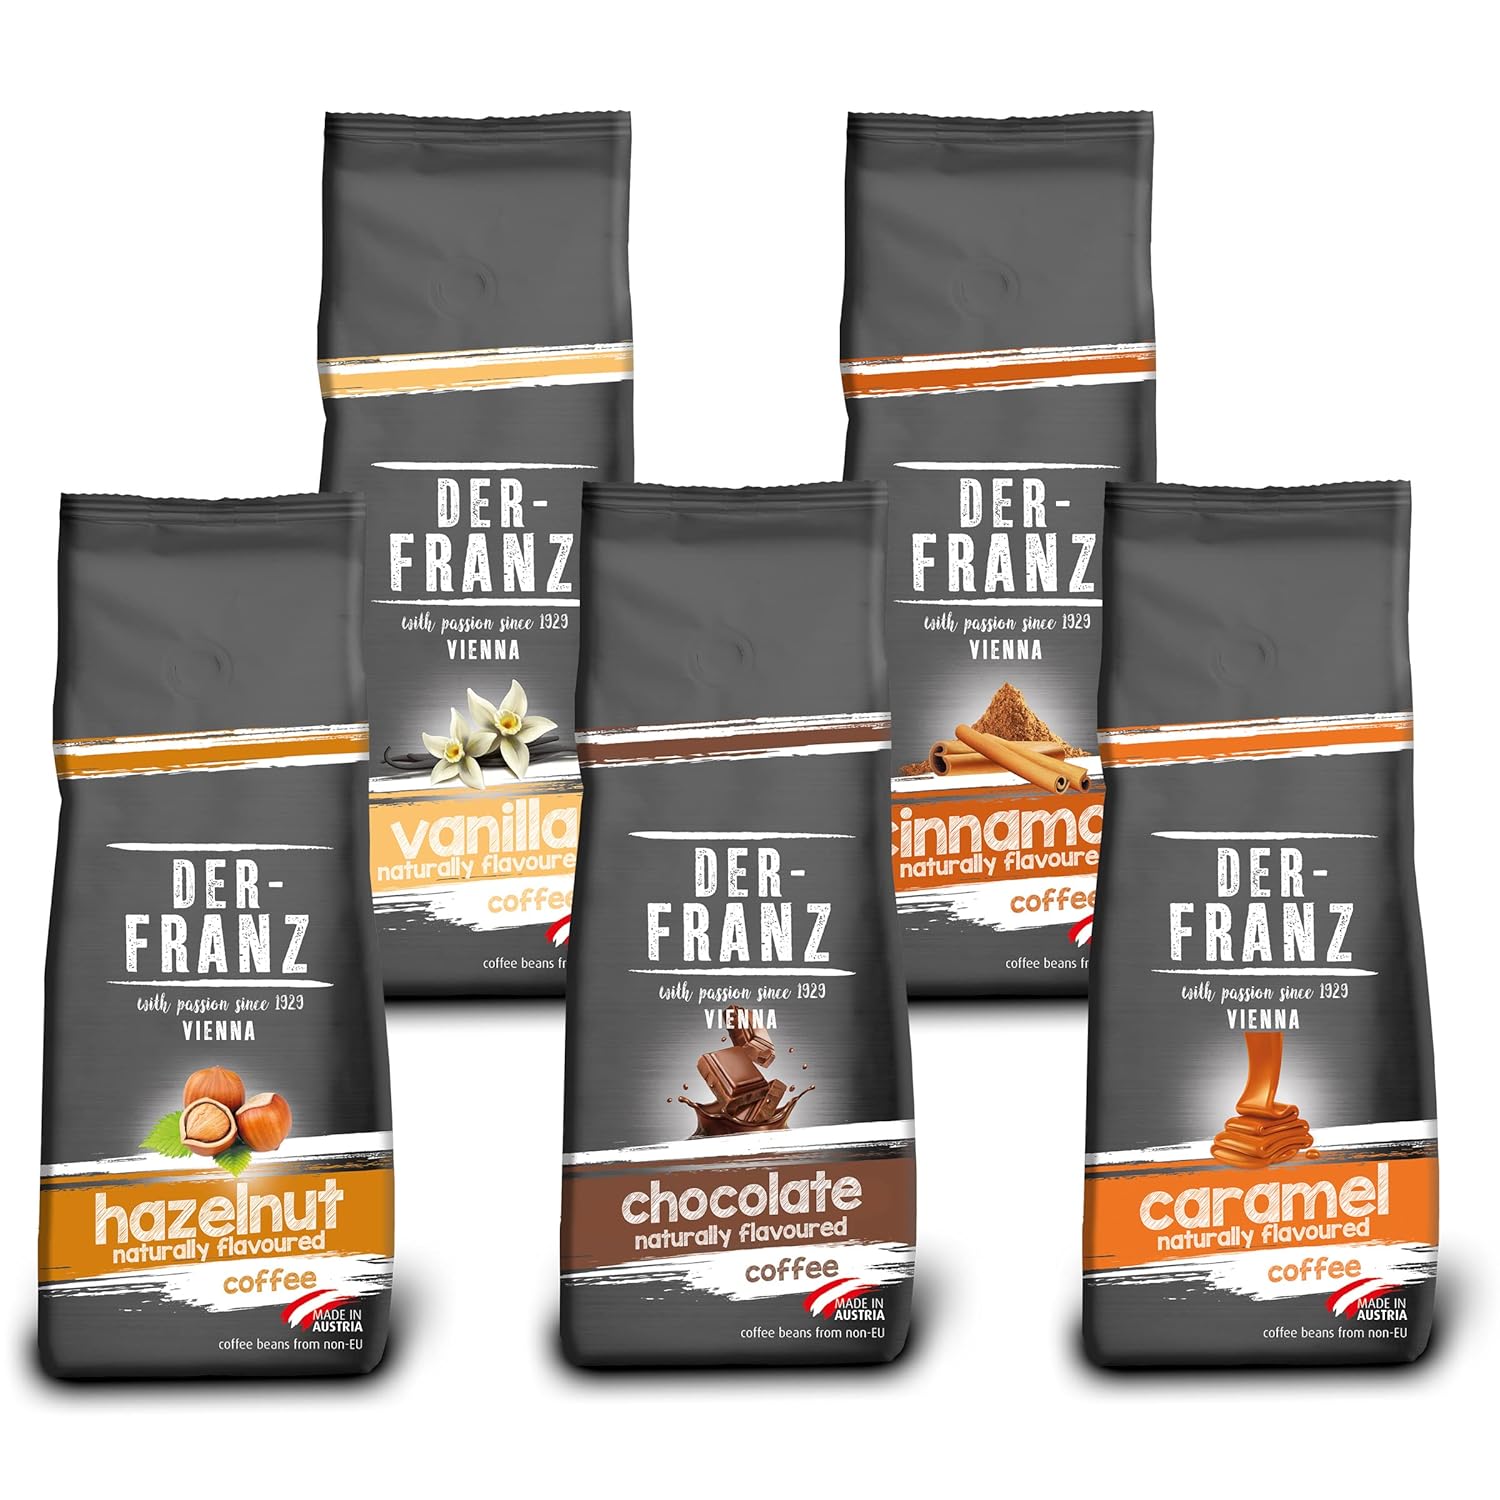 Der-Franz Coffee Pack, Whole Bean, Flavored, 5 x 500 g (1 x Hazelnut, 1 x Vanilla, 1 x Chocolate, 1 x Cinnamon, 1 x Caramel)